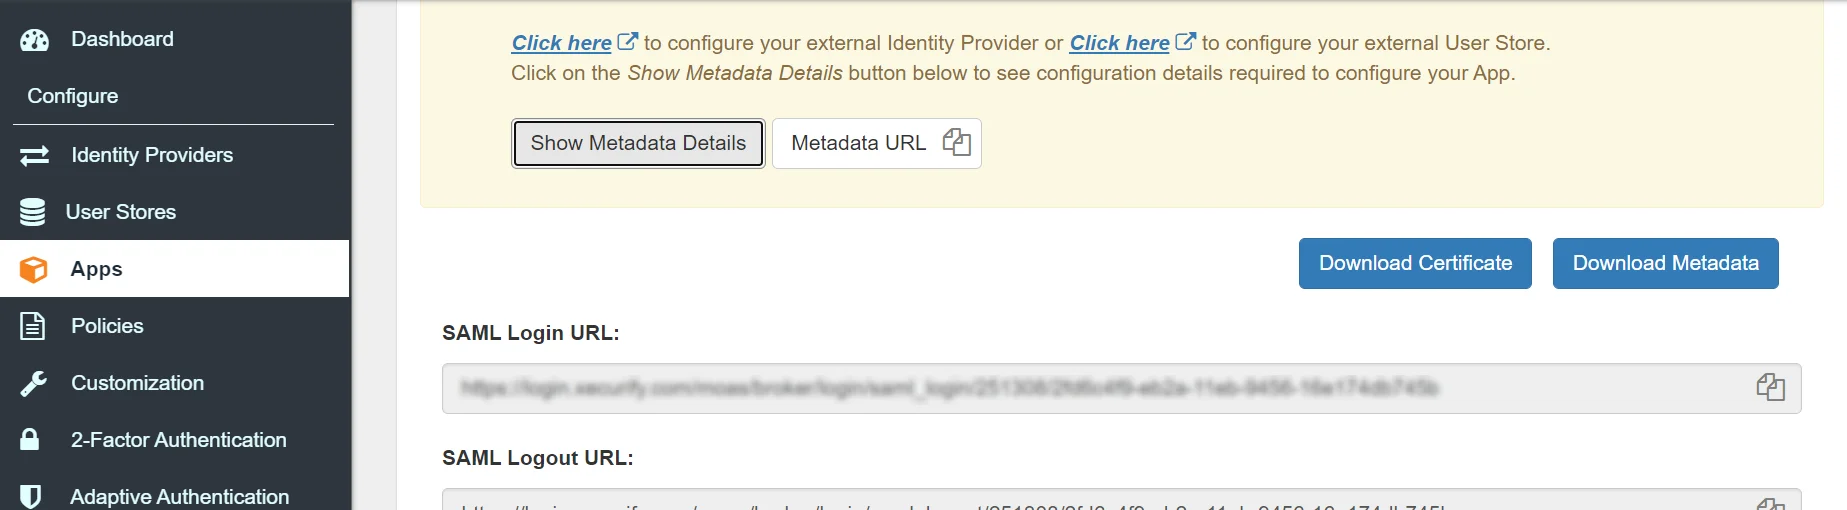 Mediasite Single Sign On (sso) Download Metadata